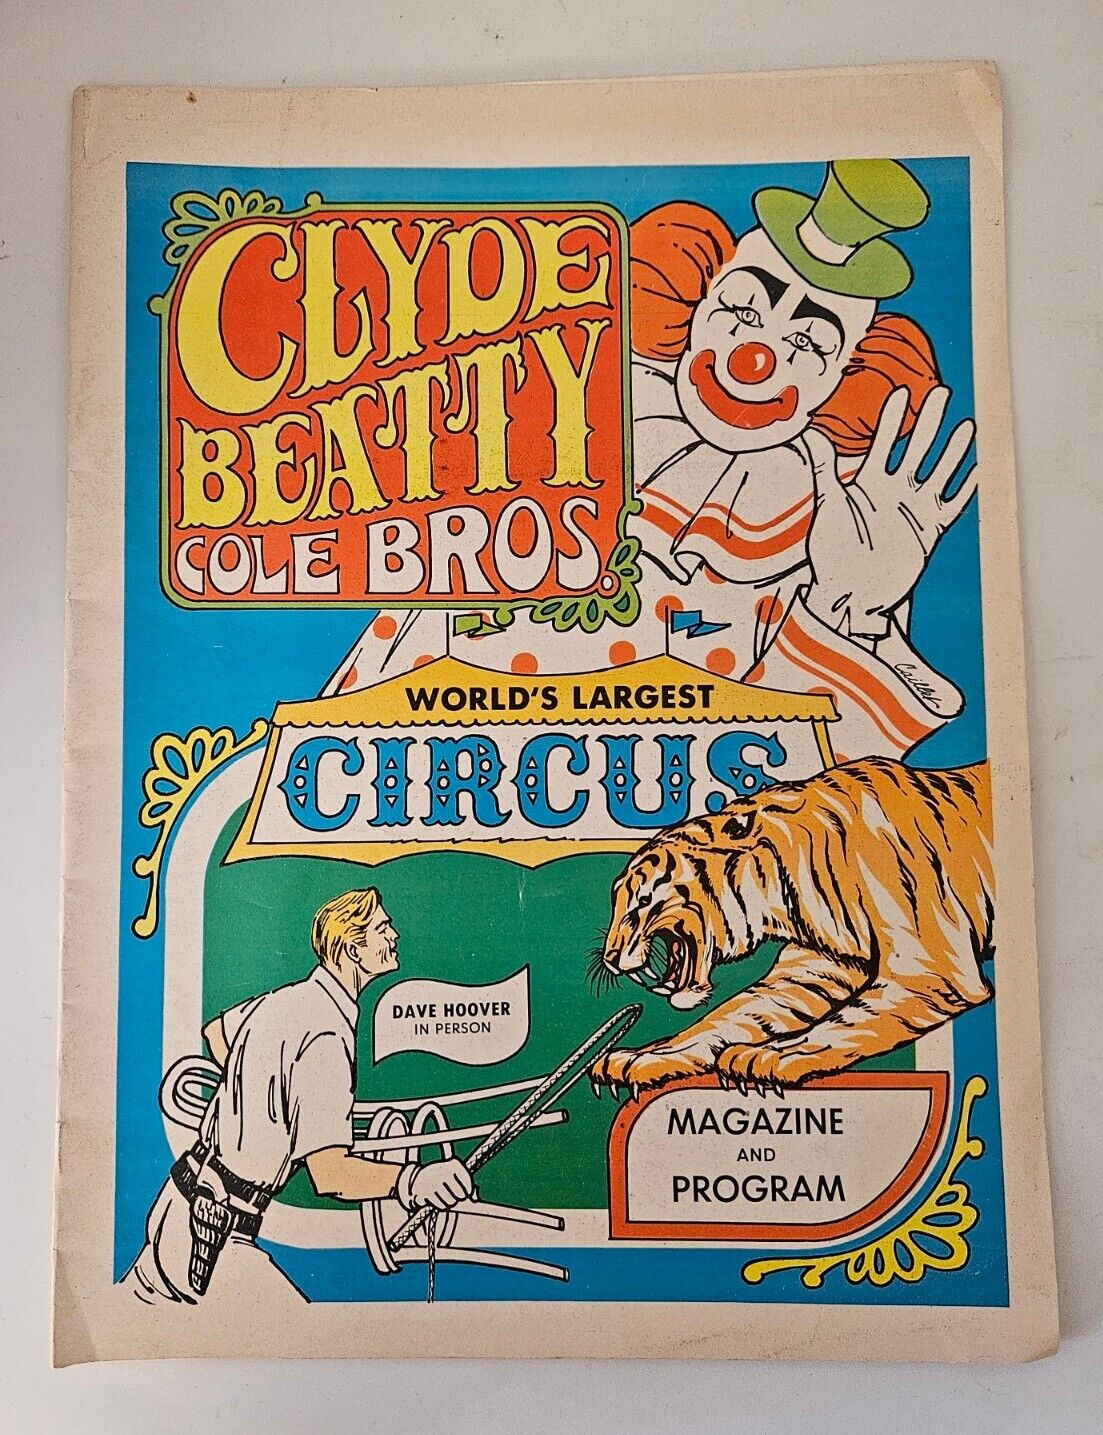 Clyde Beatty Cole Bros. Brothers 1972 Vintage Circus Program Booklet Souvenir